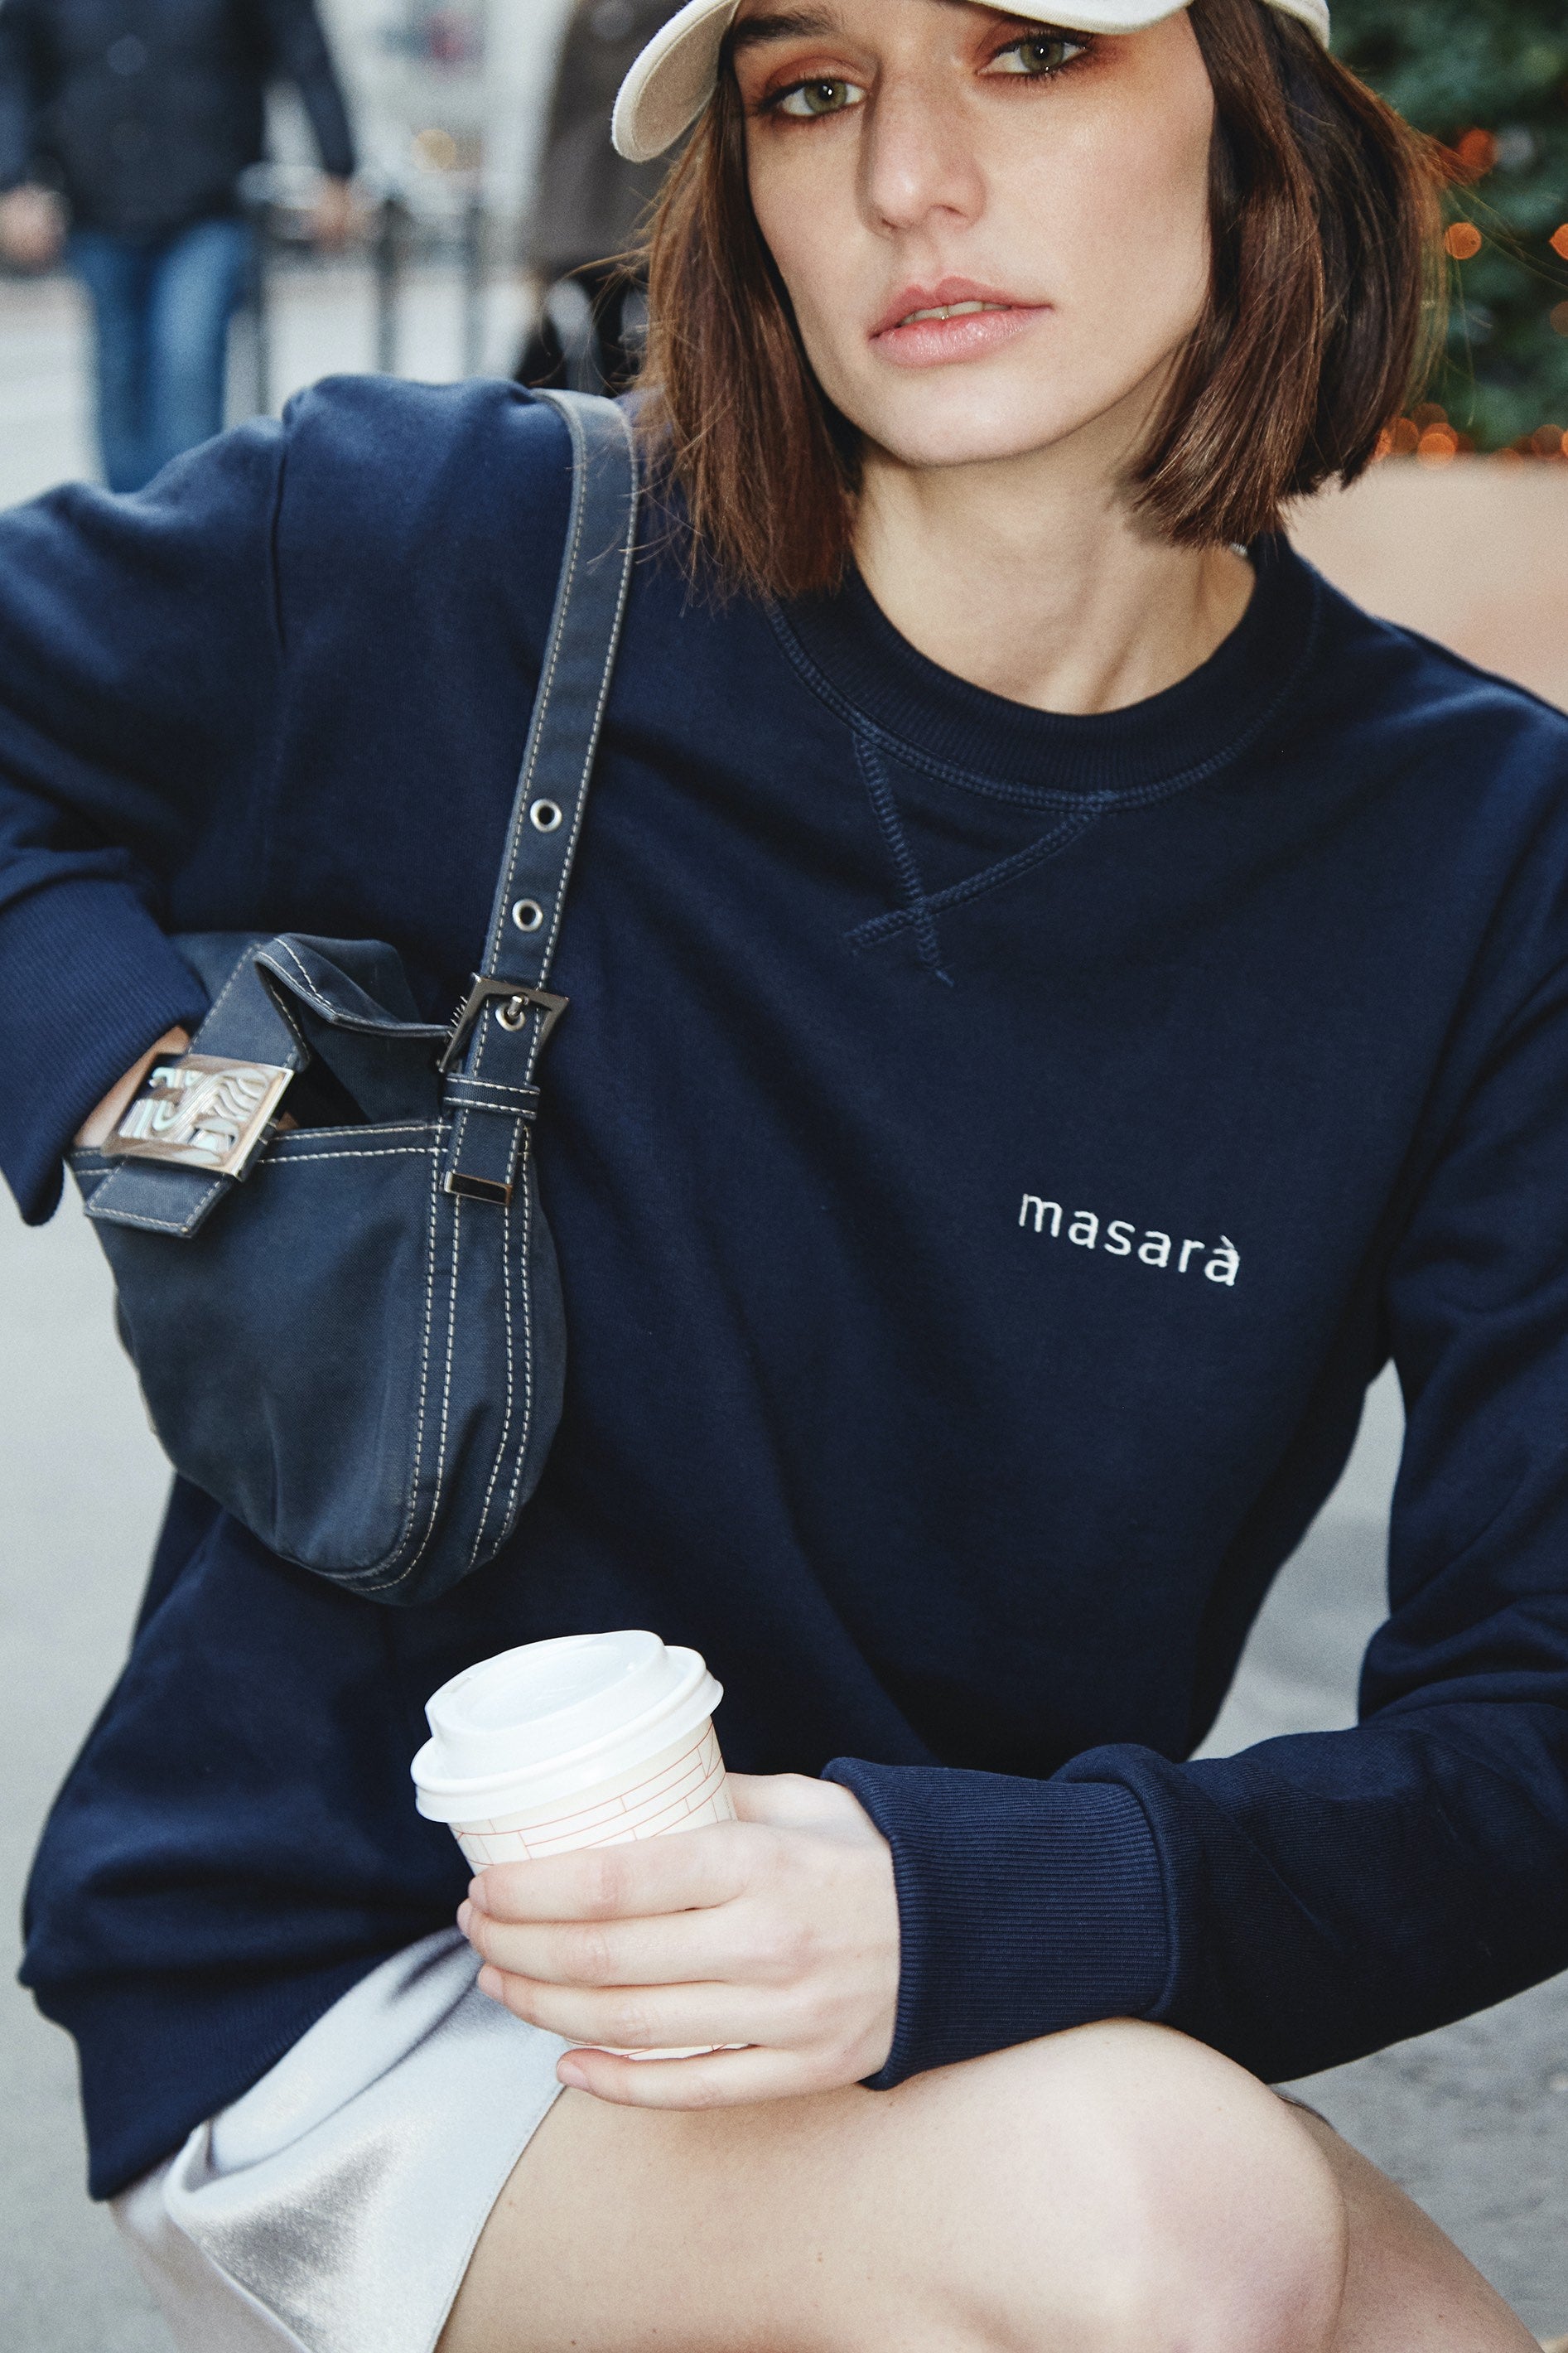 Girl on the street holding her coffee wearing masara navy blue and cream logo sweatshirt